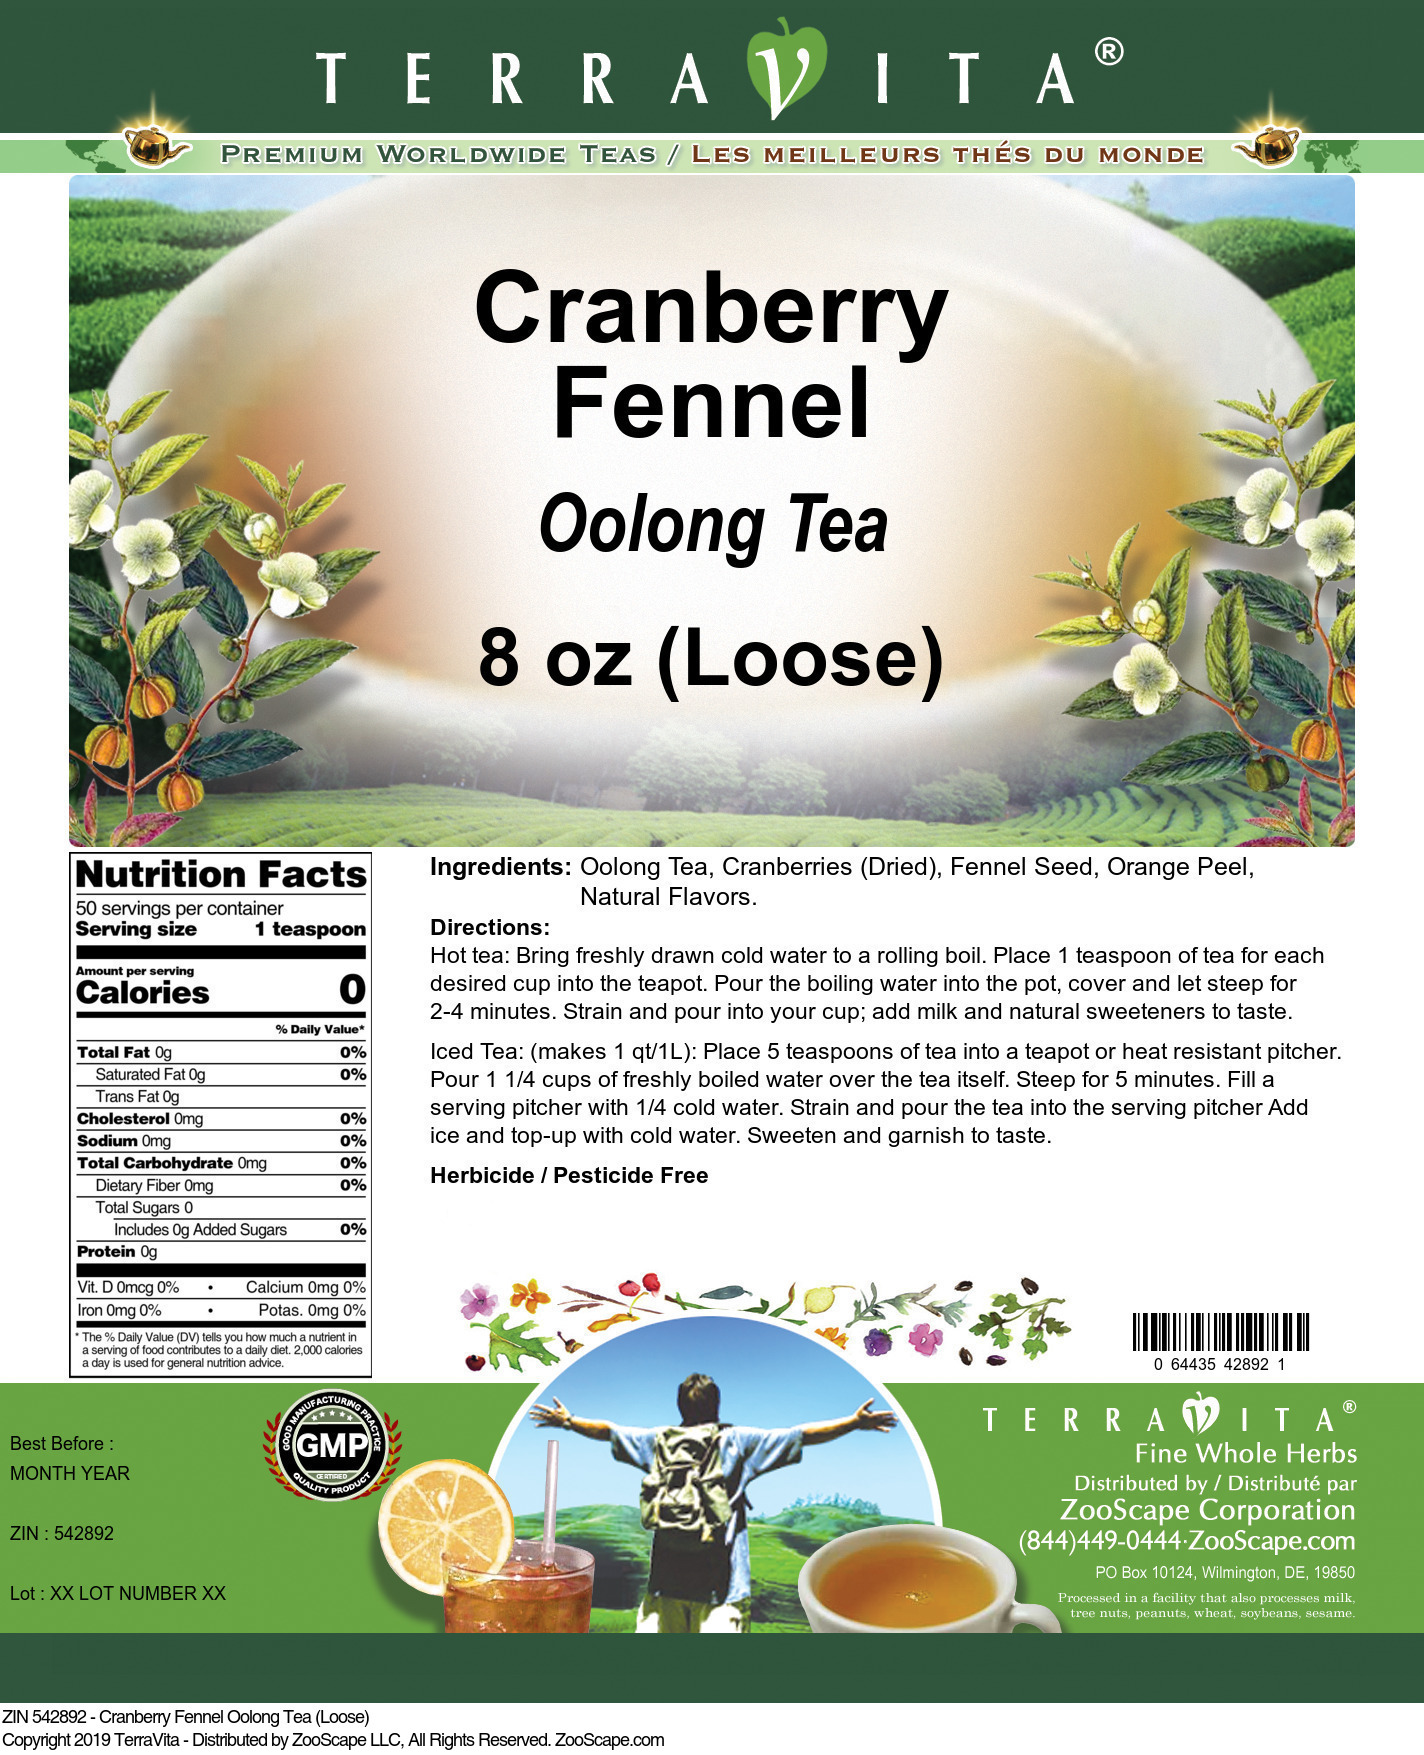 Cranberry Fennel Oolong Tea (Loose) - Label